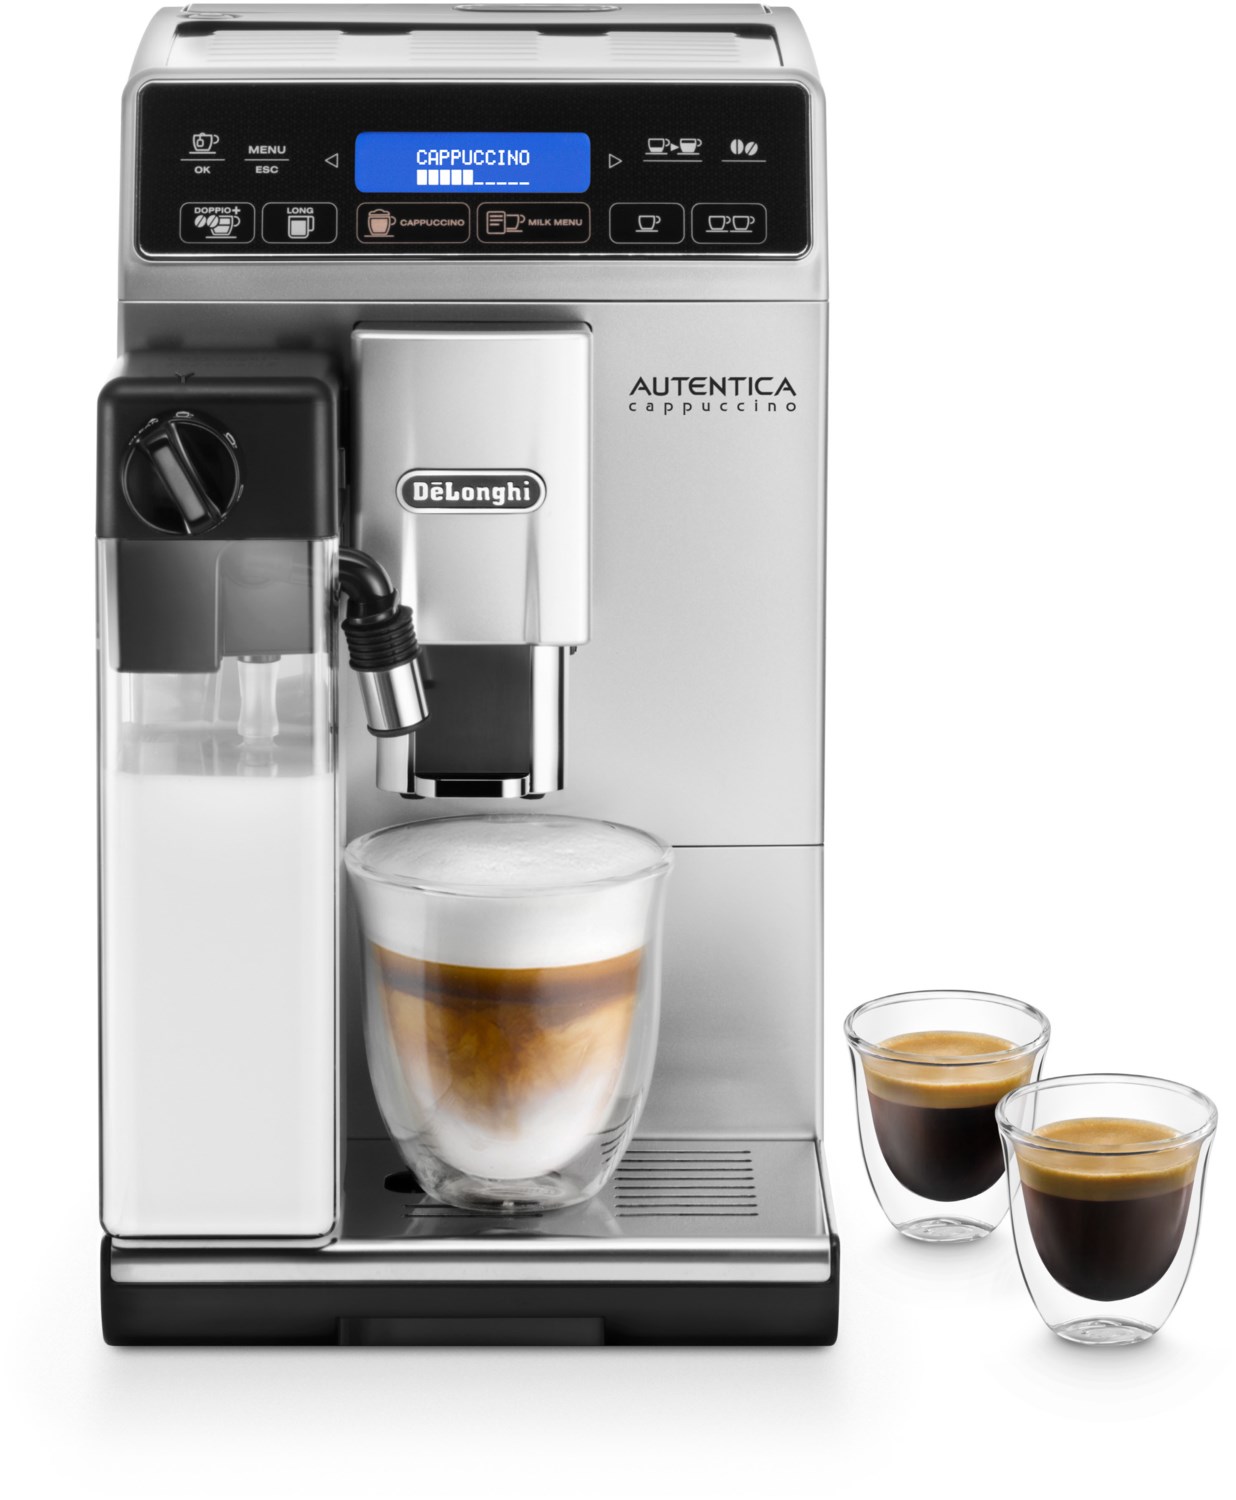 ETAM 29.660.SB Autentica Cappuccino Kaffee-Vollautomat silber/schwarz von Delonghi